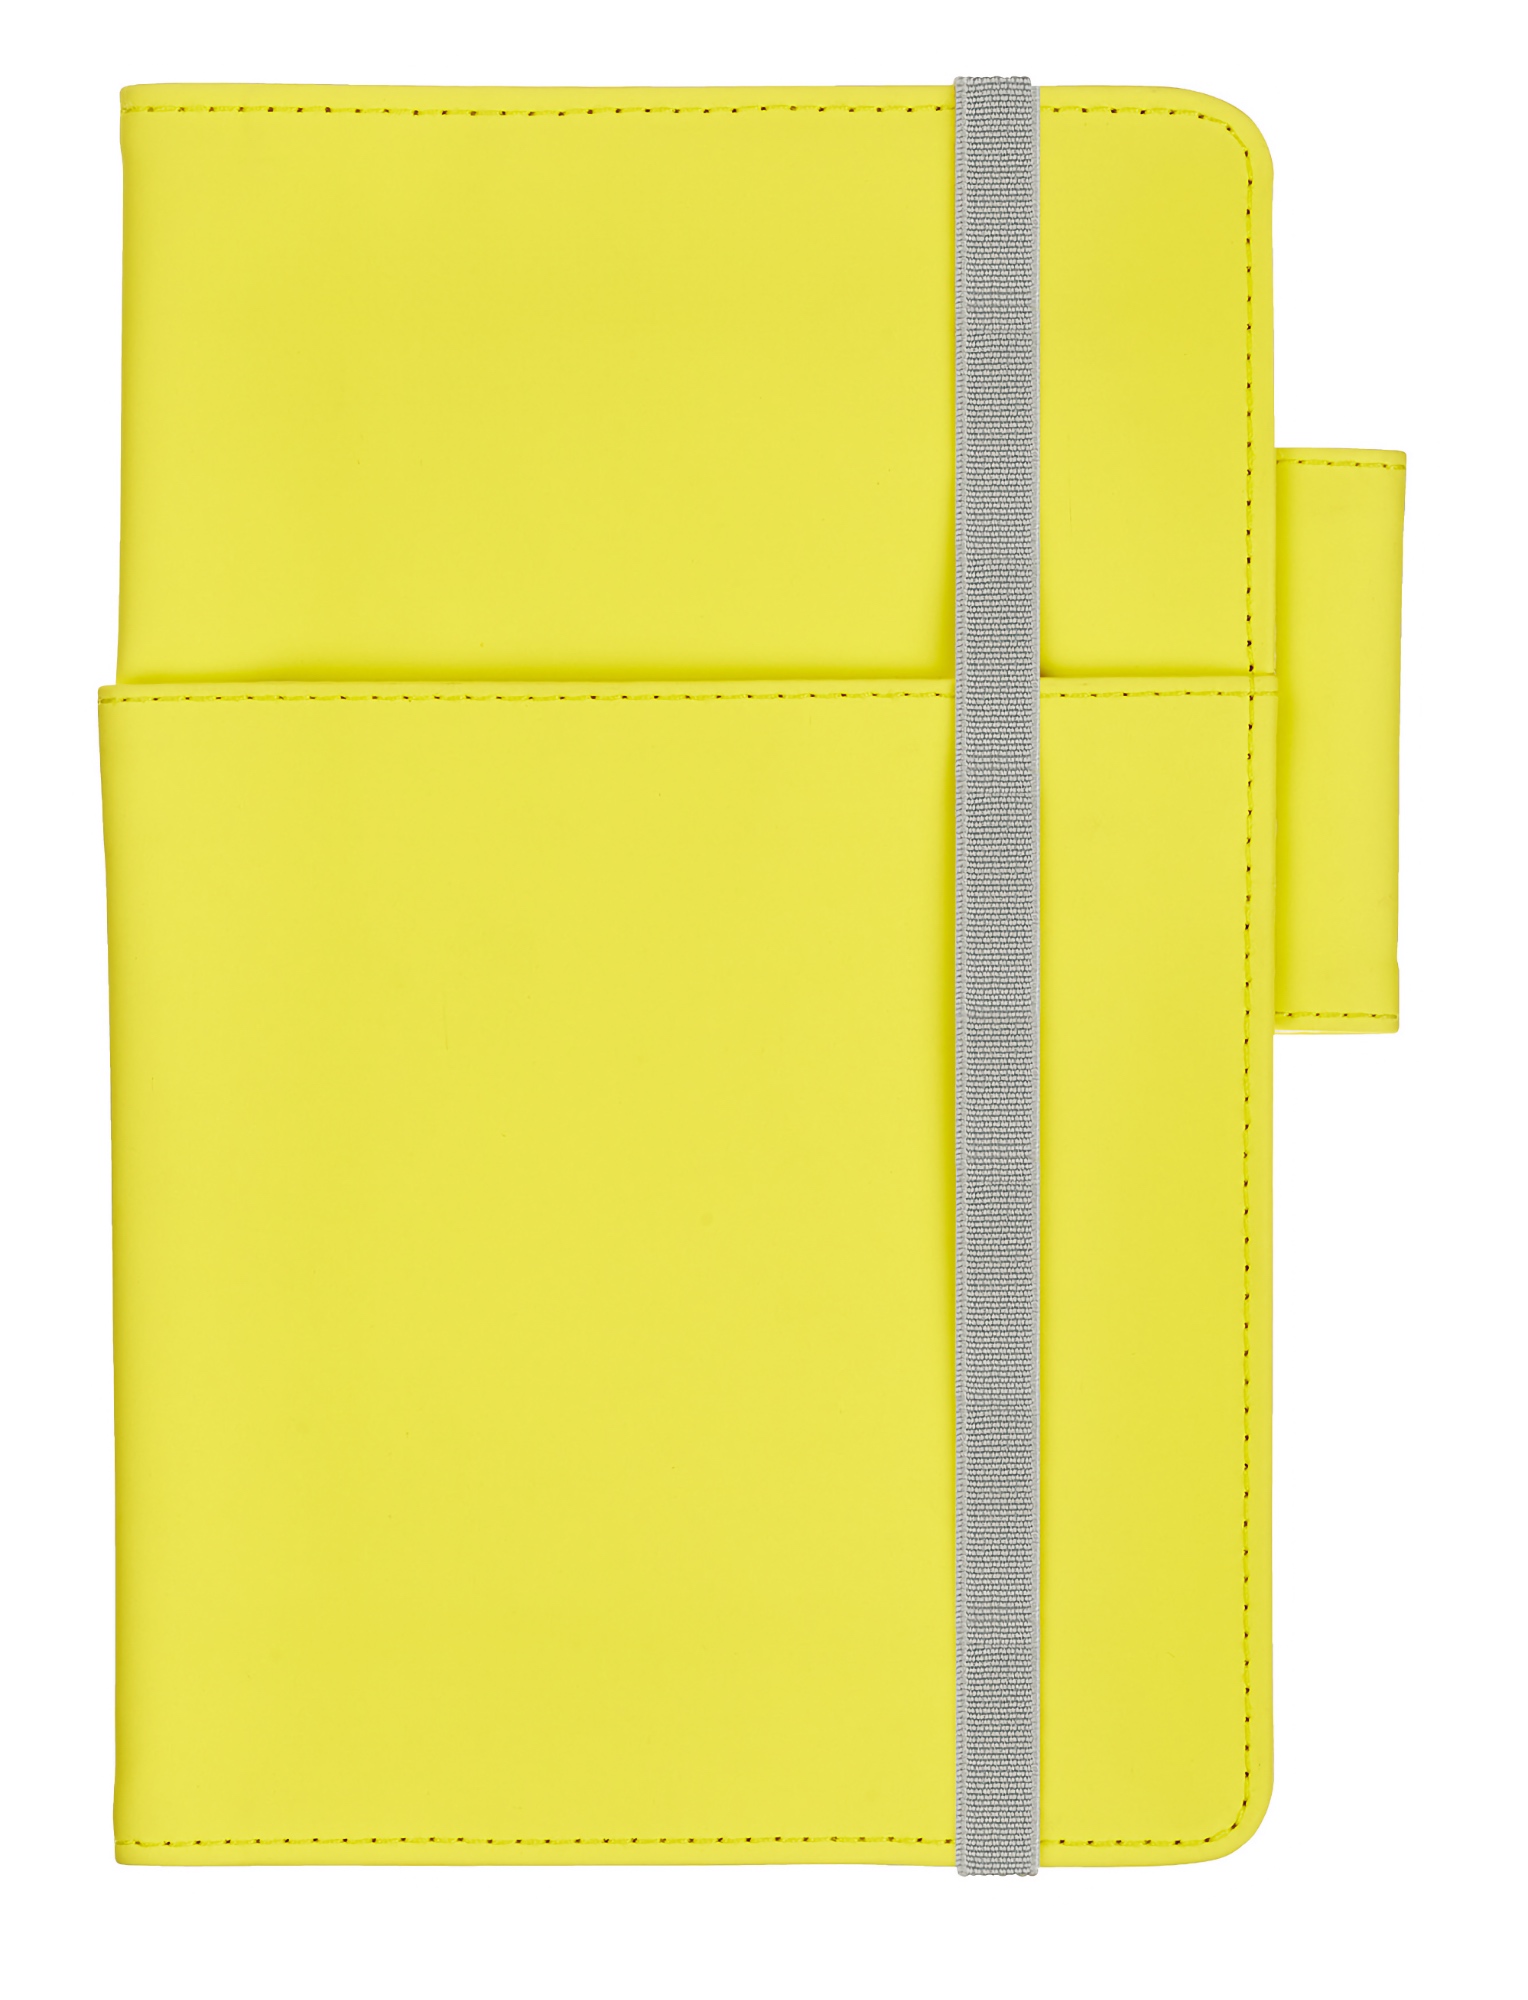 Kokuyo Jibun Techo Accessory Soft Cover A5 Slim Yellow